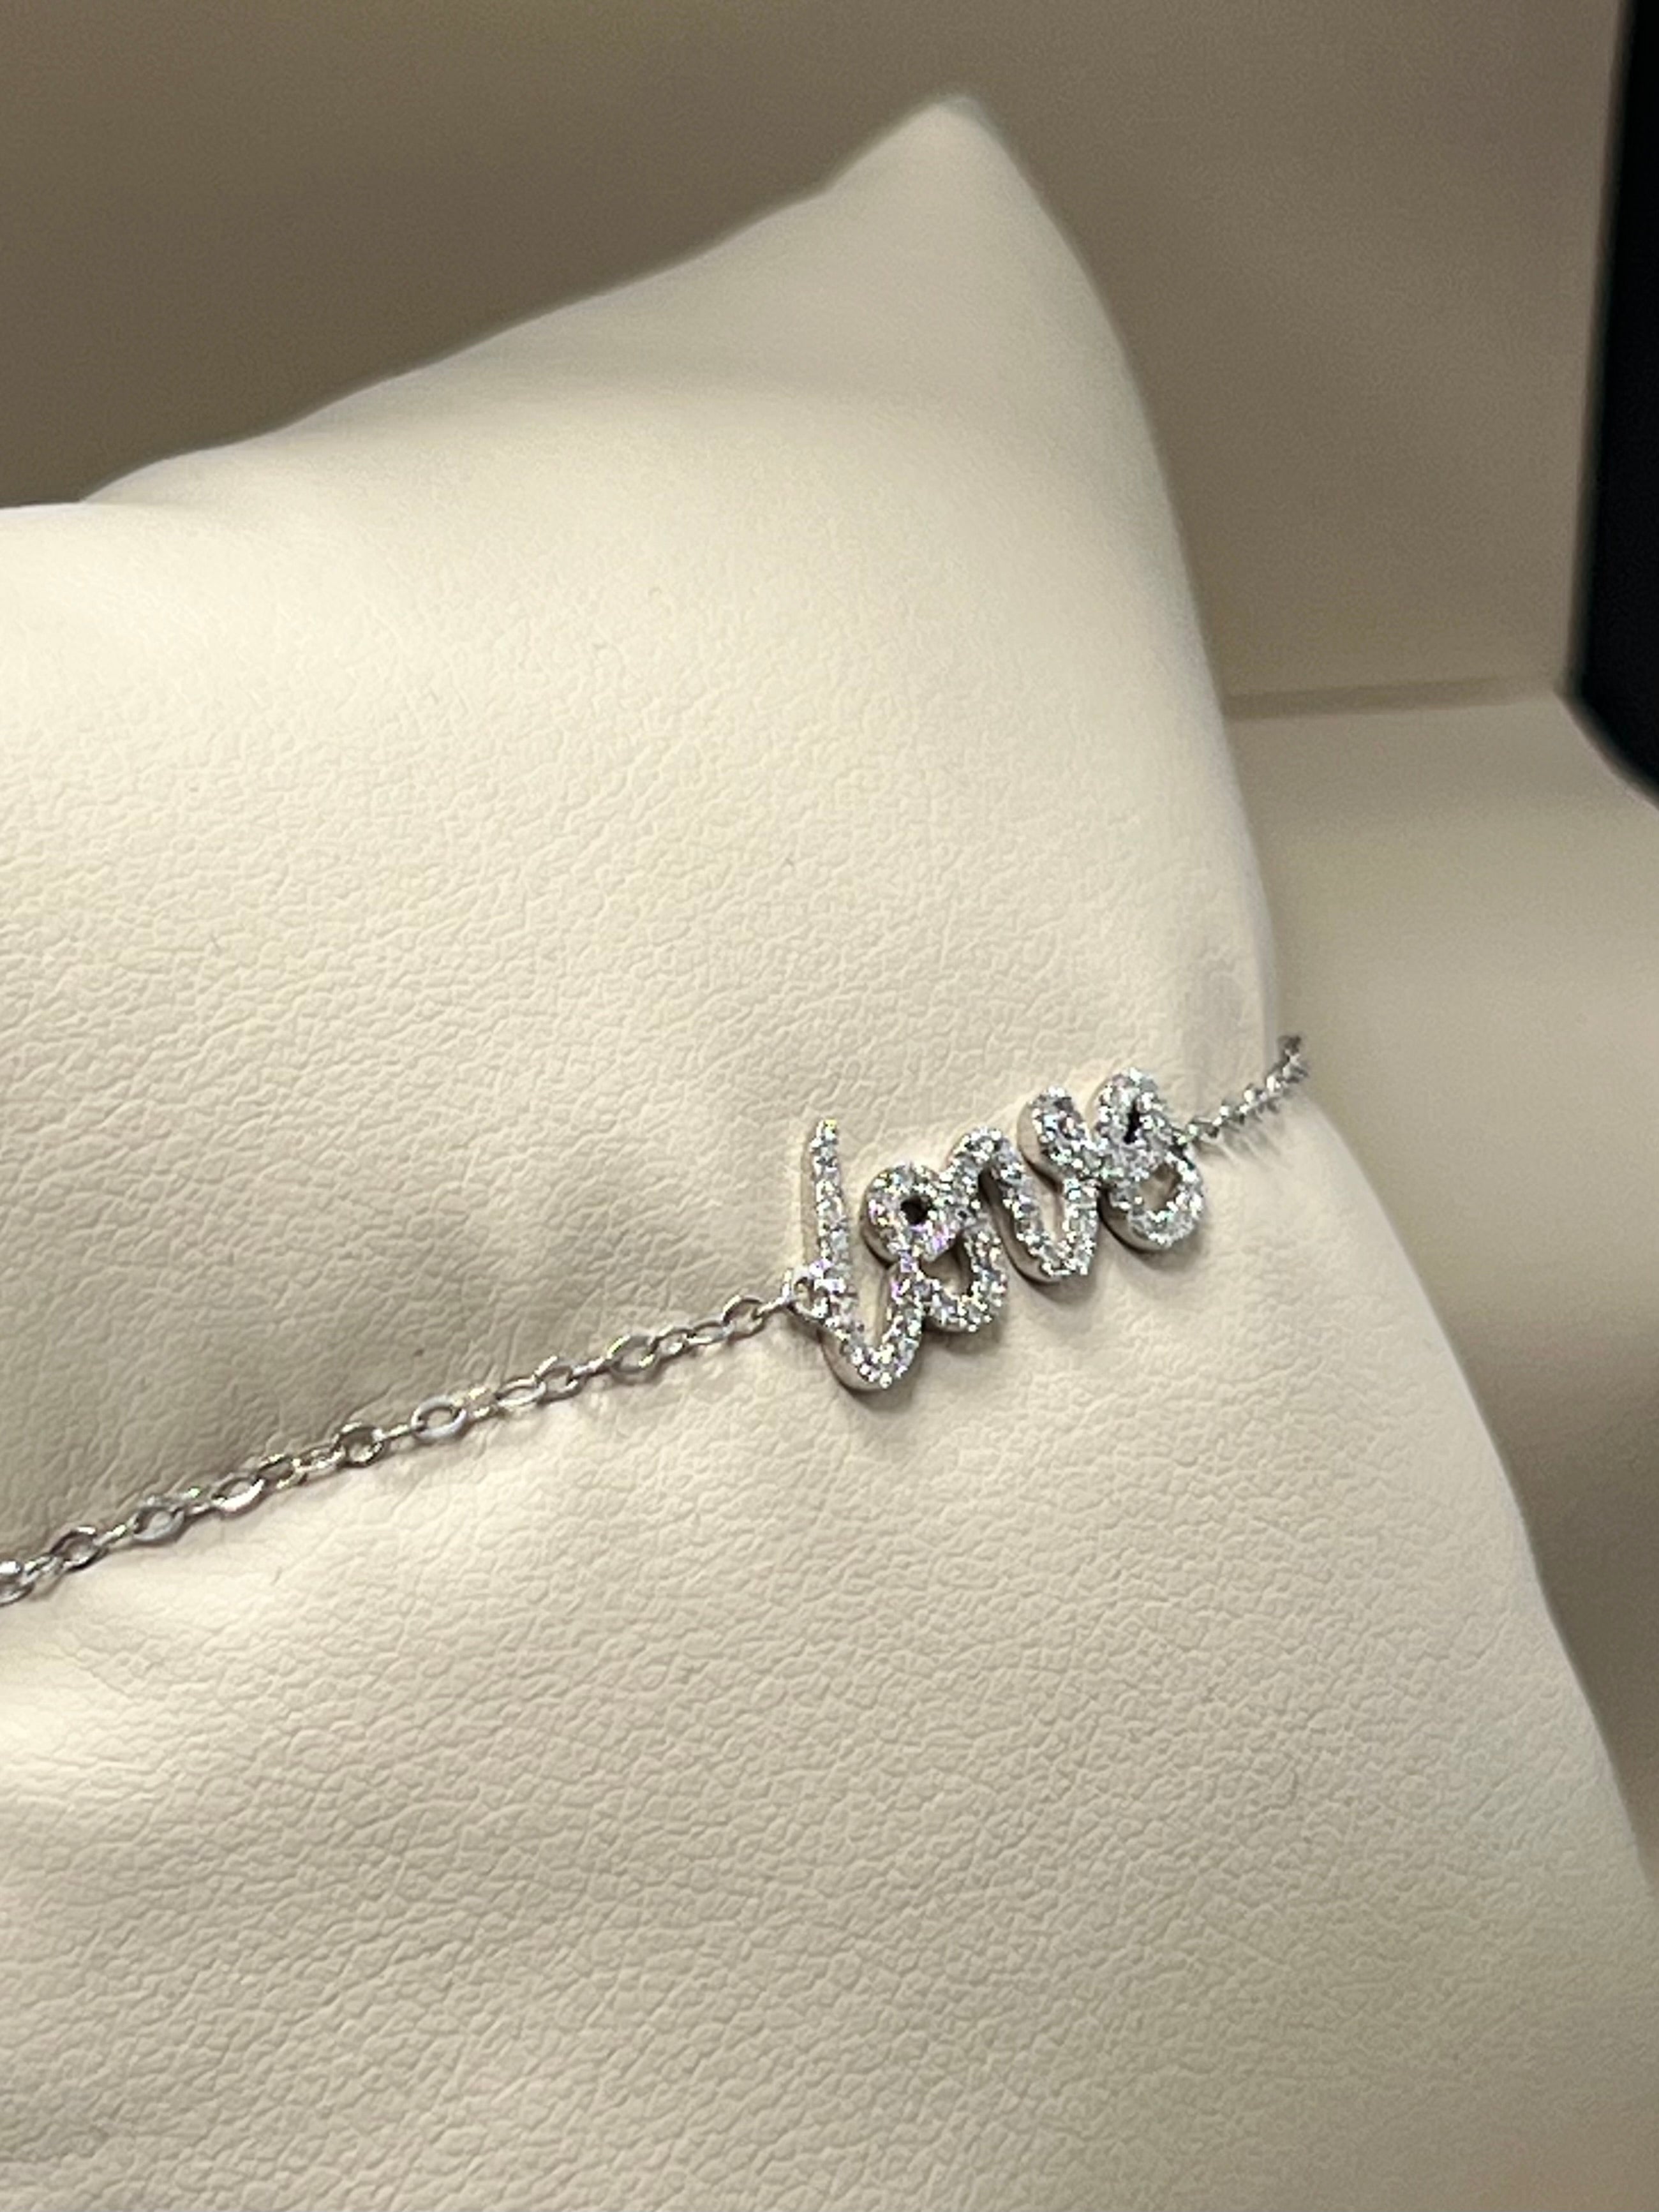 14K White Gold Diamond "Love" Bracelet